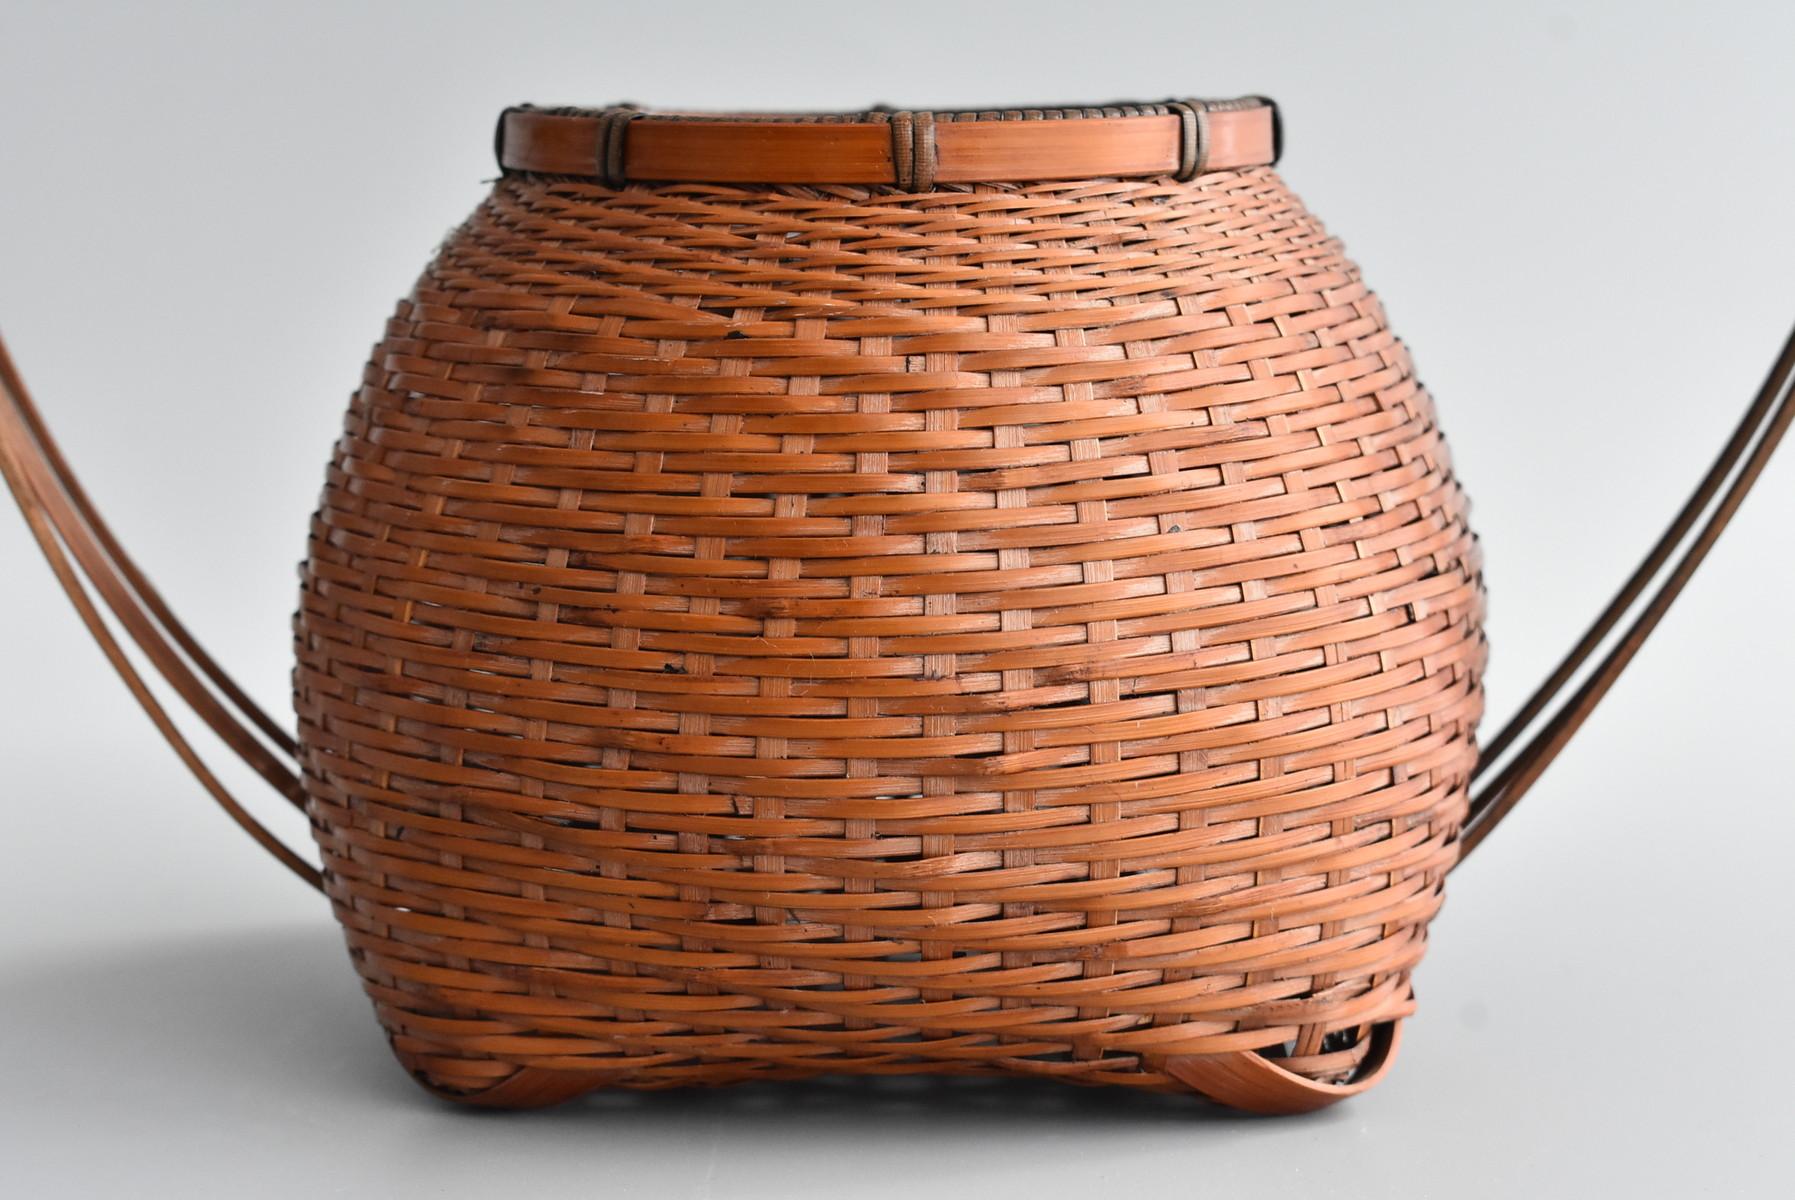 Showa Period in Japan, Small Bamboo Basket / Old Antique Flower Basket /Folk Art 1